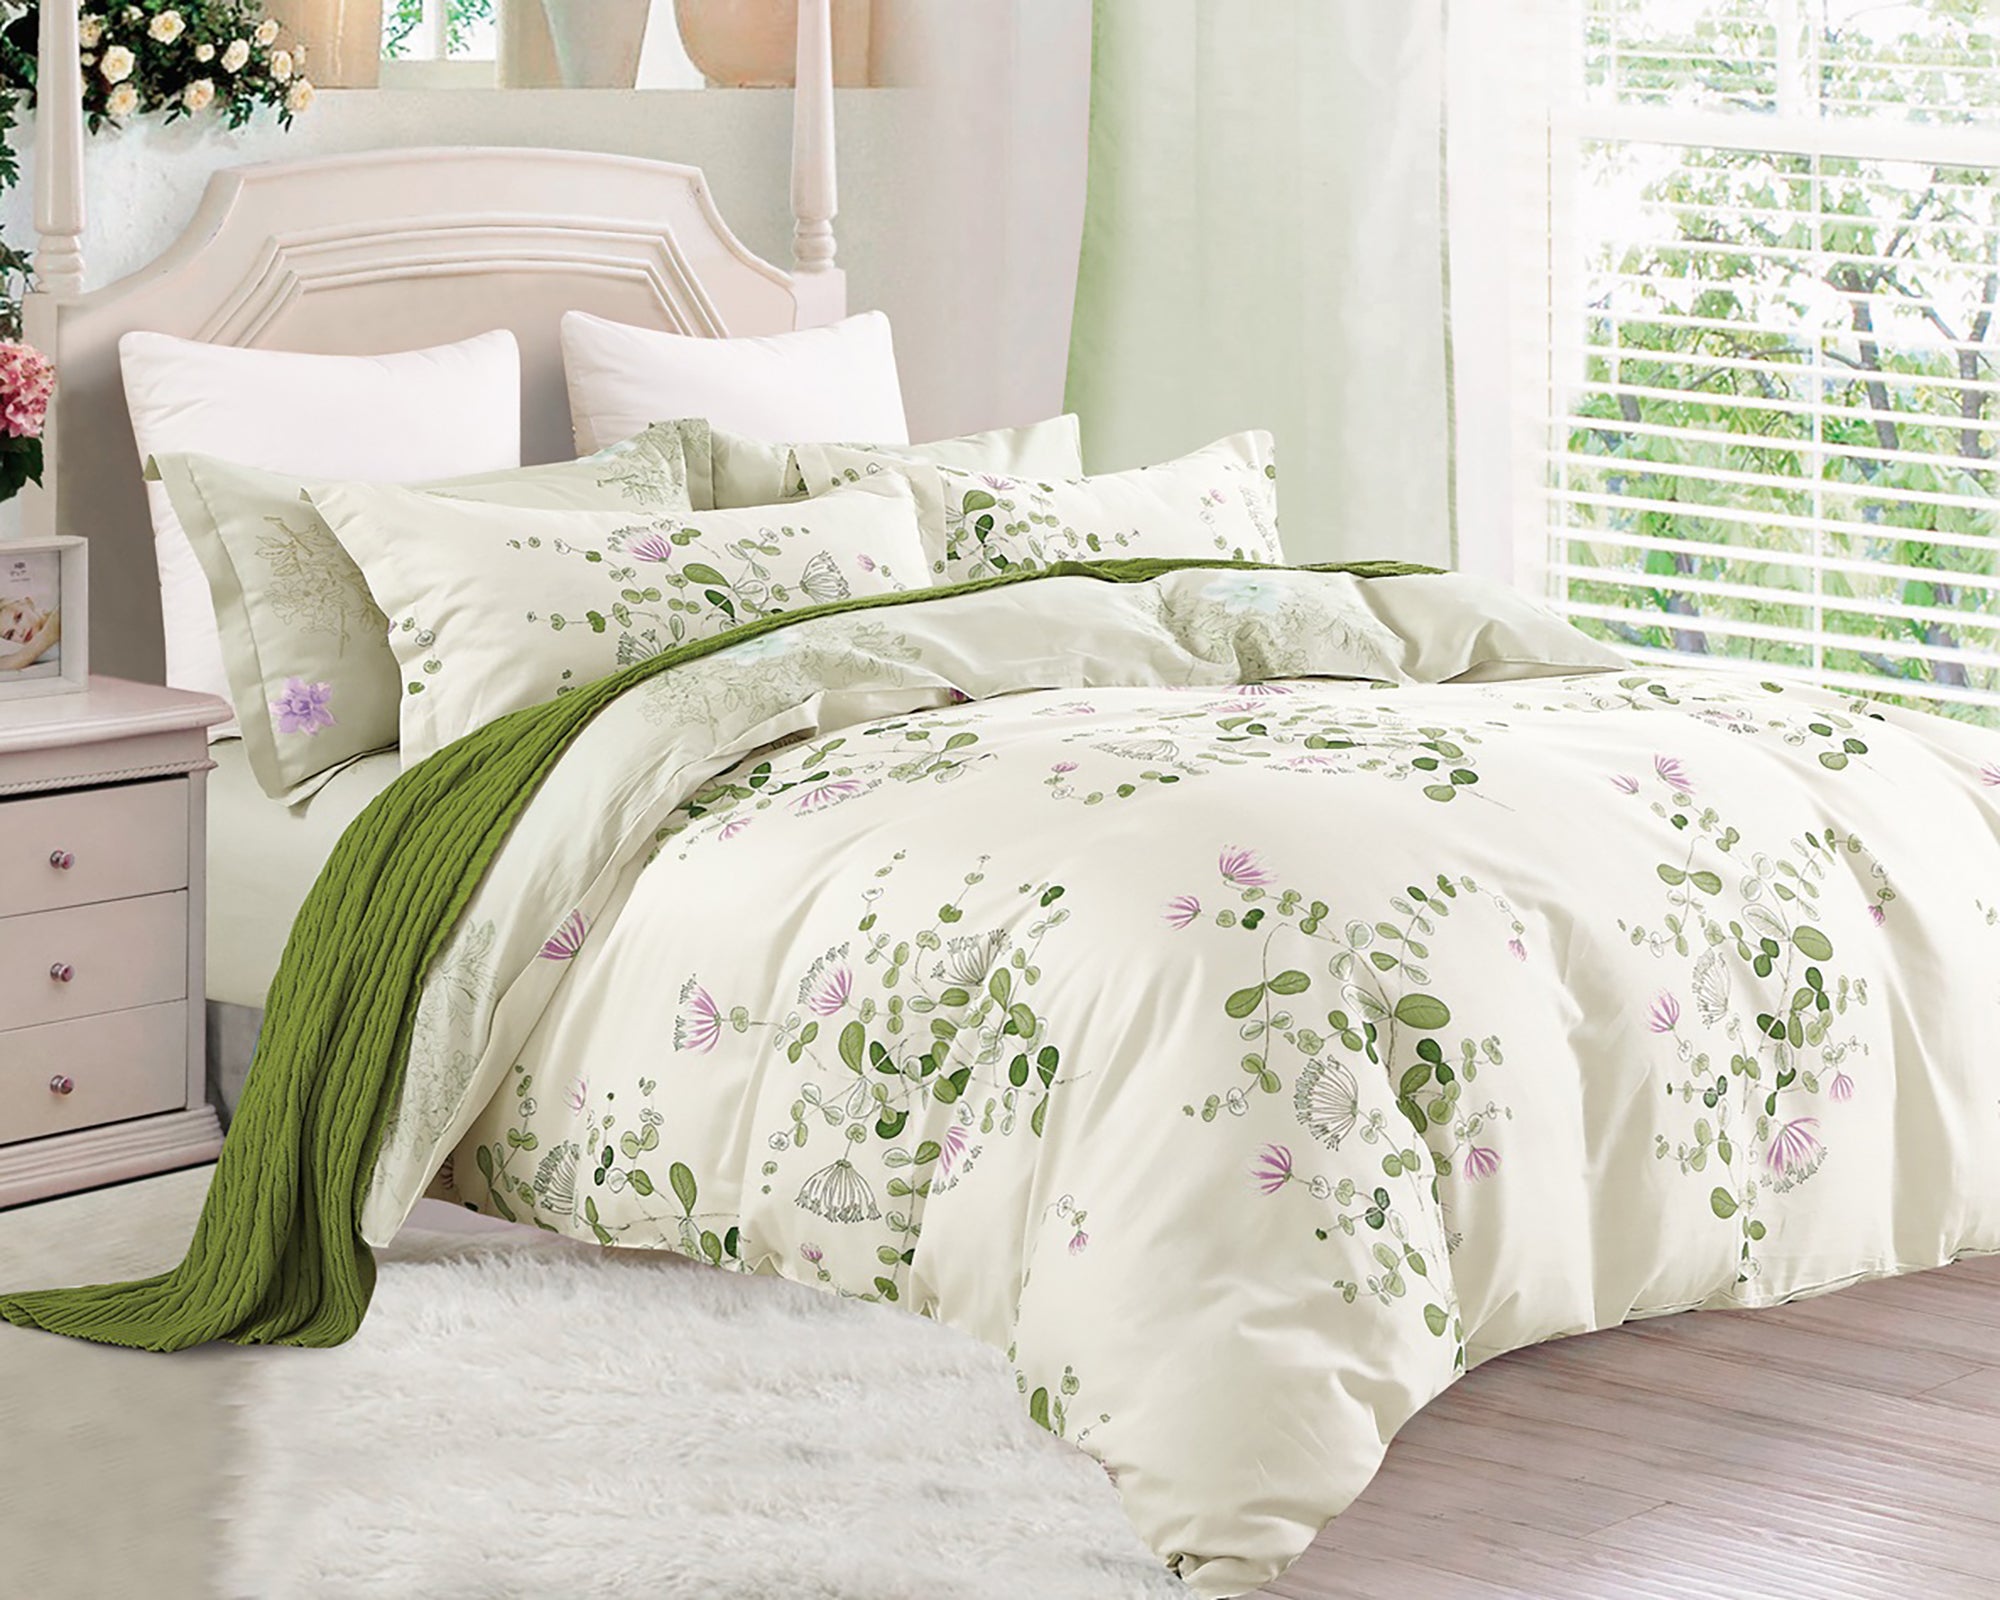 Graceful 3 Piece 100% Cotton Bedding Set: Duvet Cover and Two Pillow Shams